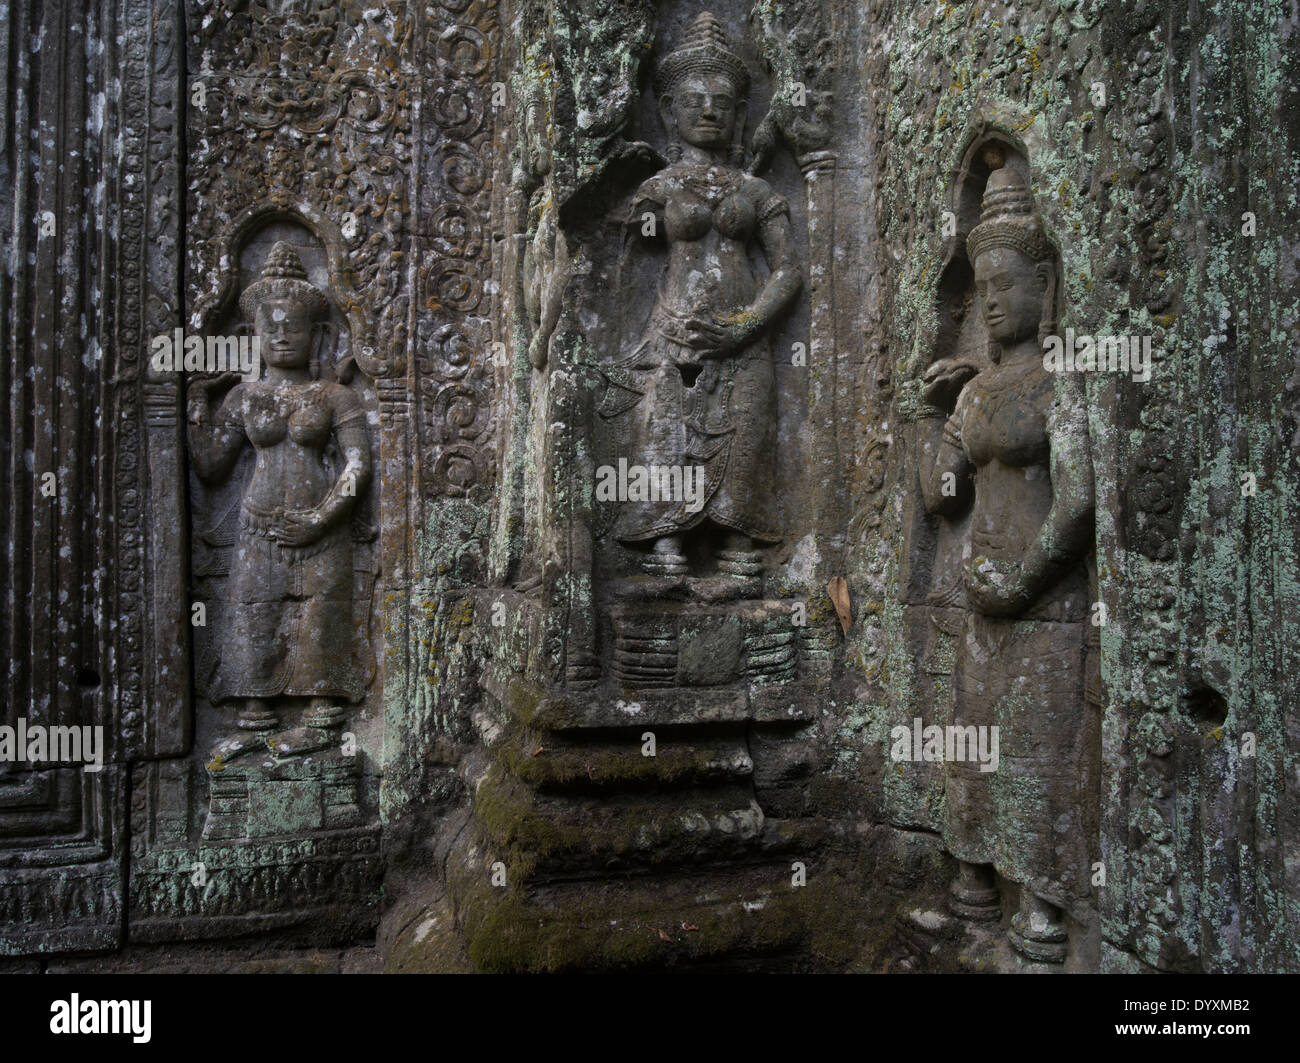 Arenaria bassorilievo sculture di Apsara a Preah Khan Temple, Siem Reap, Cambogia Foto Stock